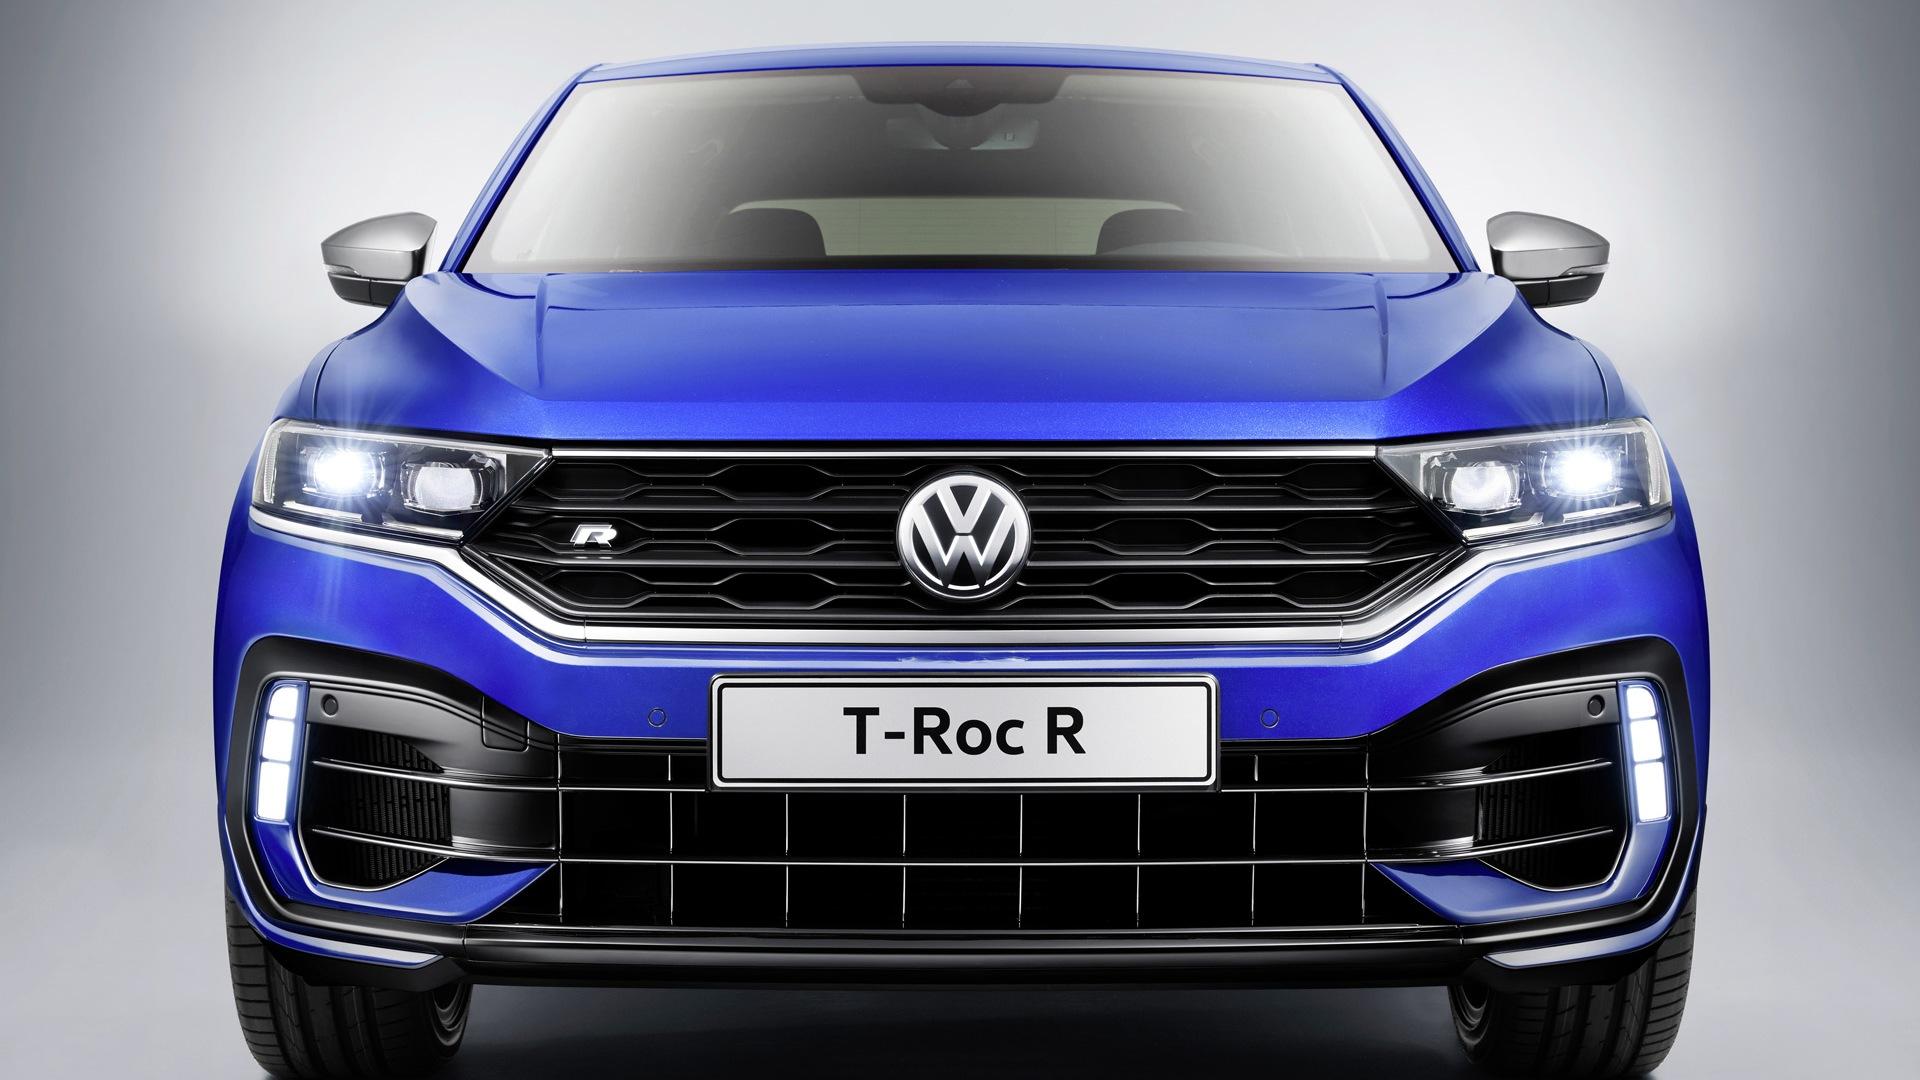 Volkswagen T Roc R Revealed With 2.0 Liter Turbo, 296 Horsepower